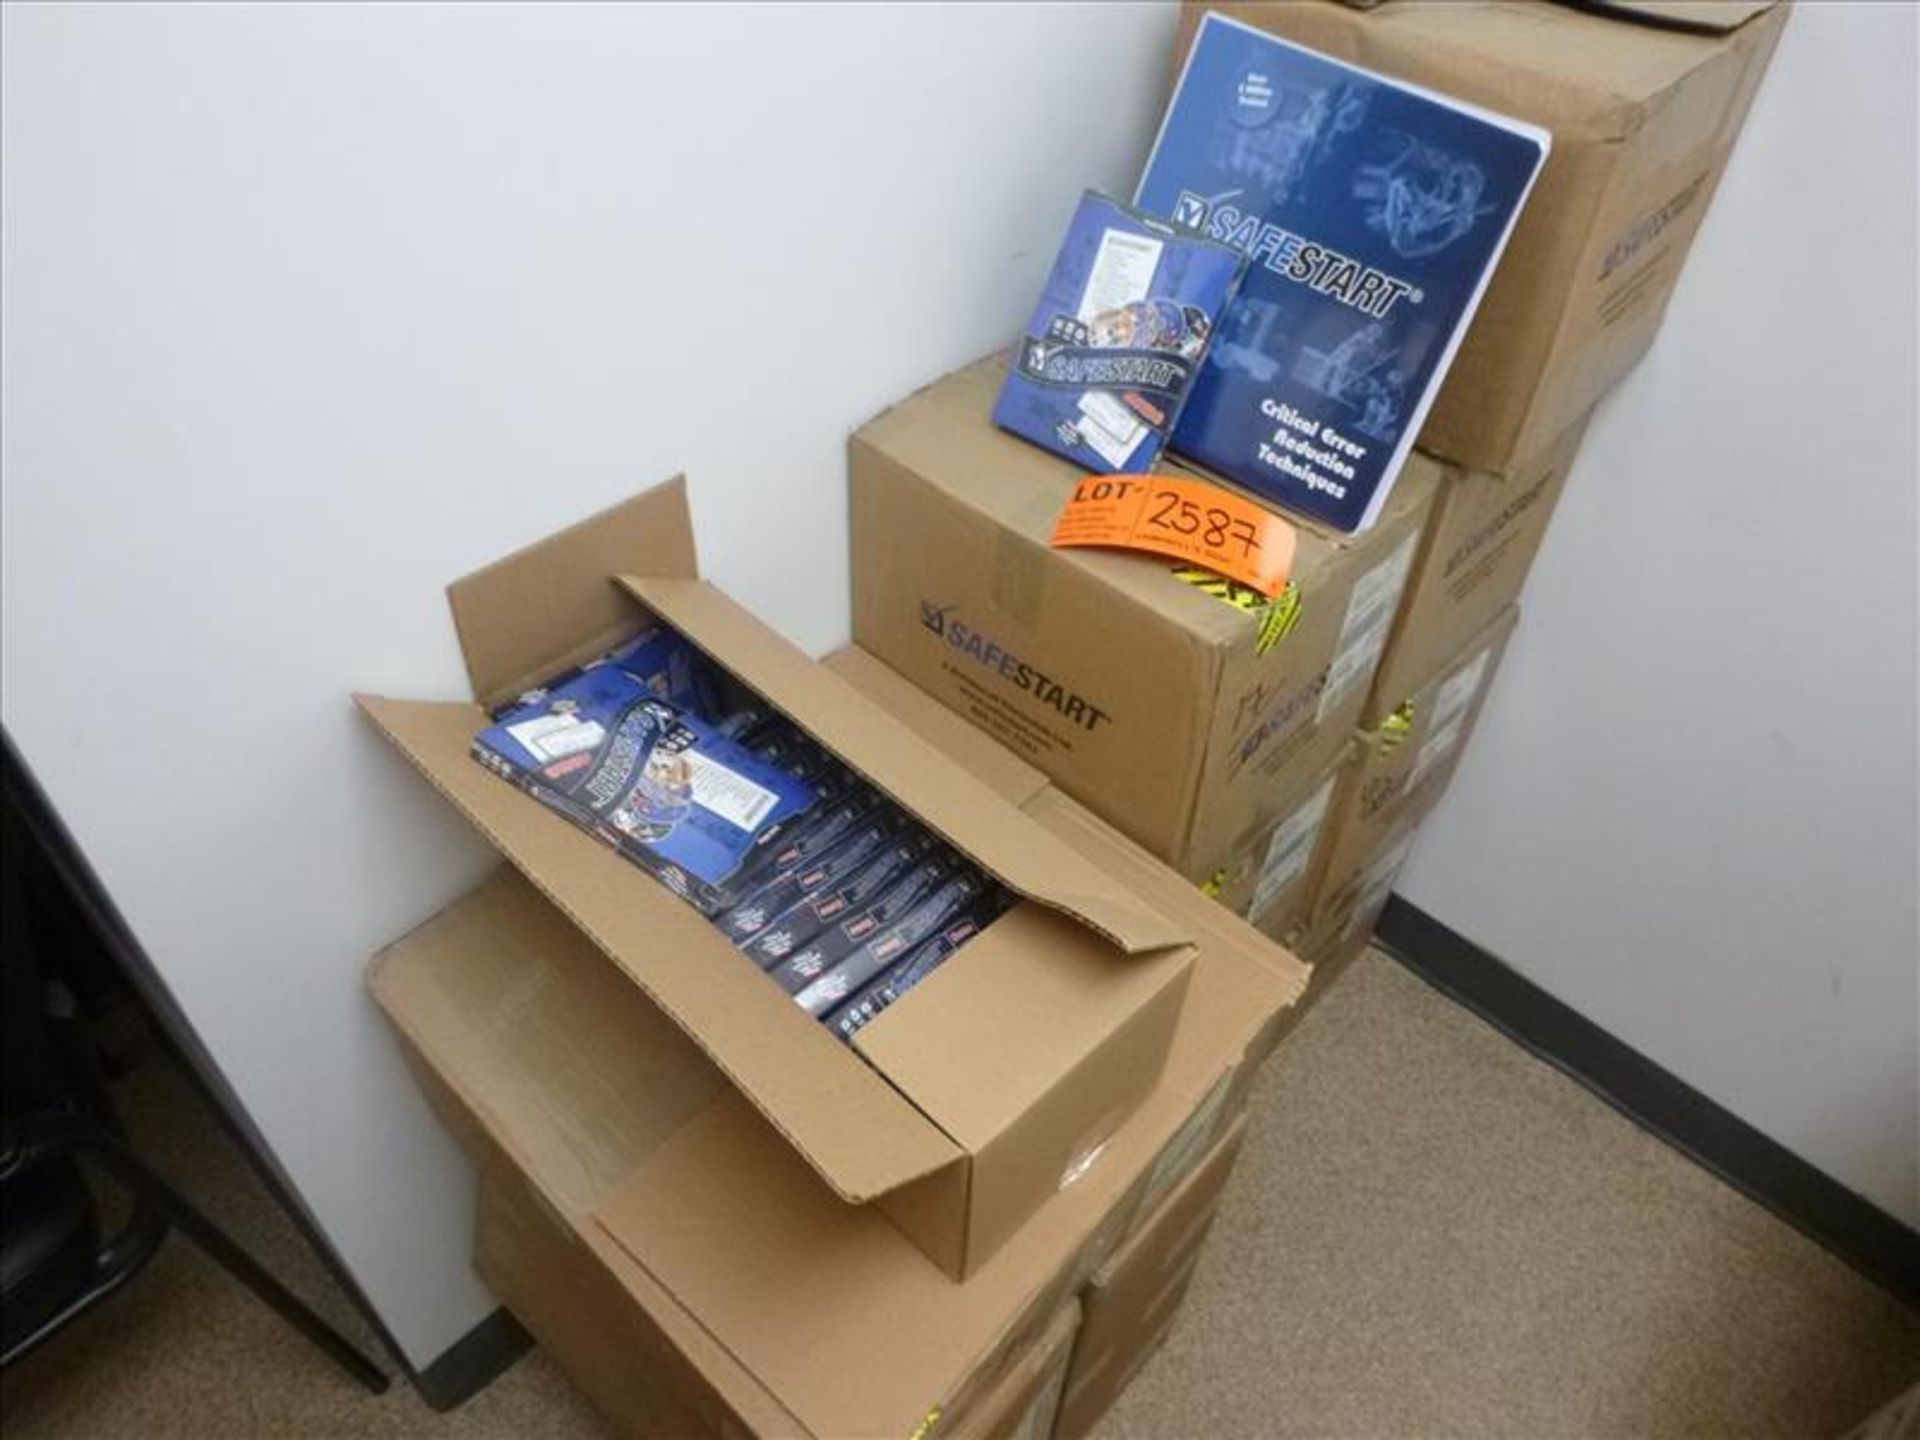 SafeStart Program binders and DVDs [First Aid, 1st Floor]